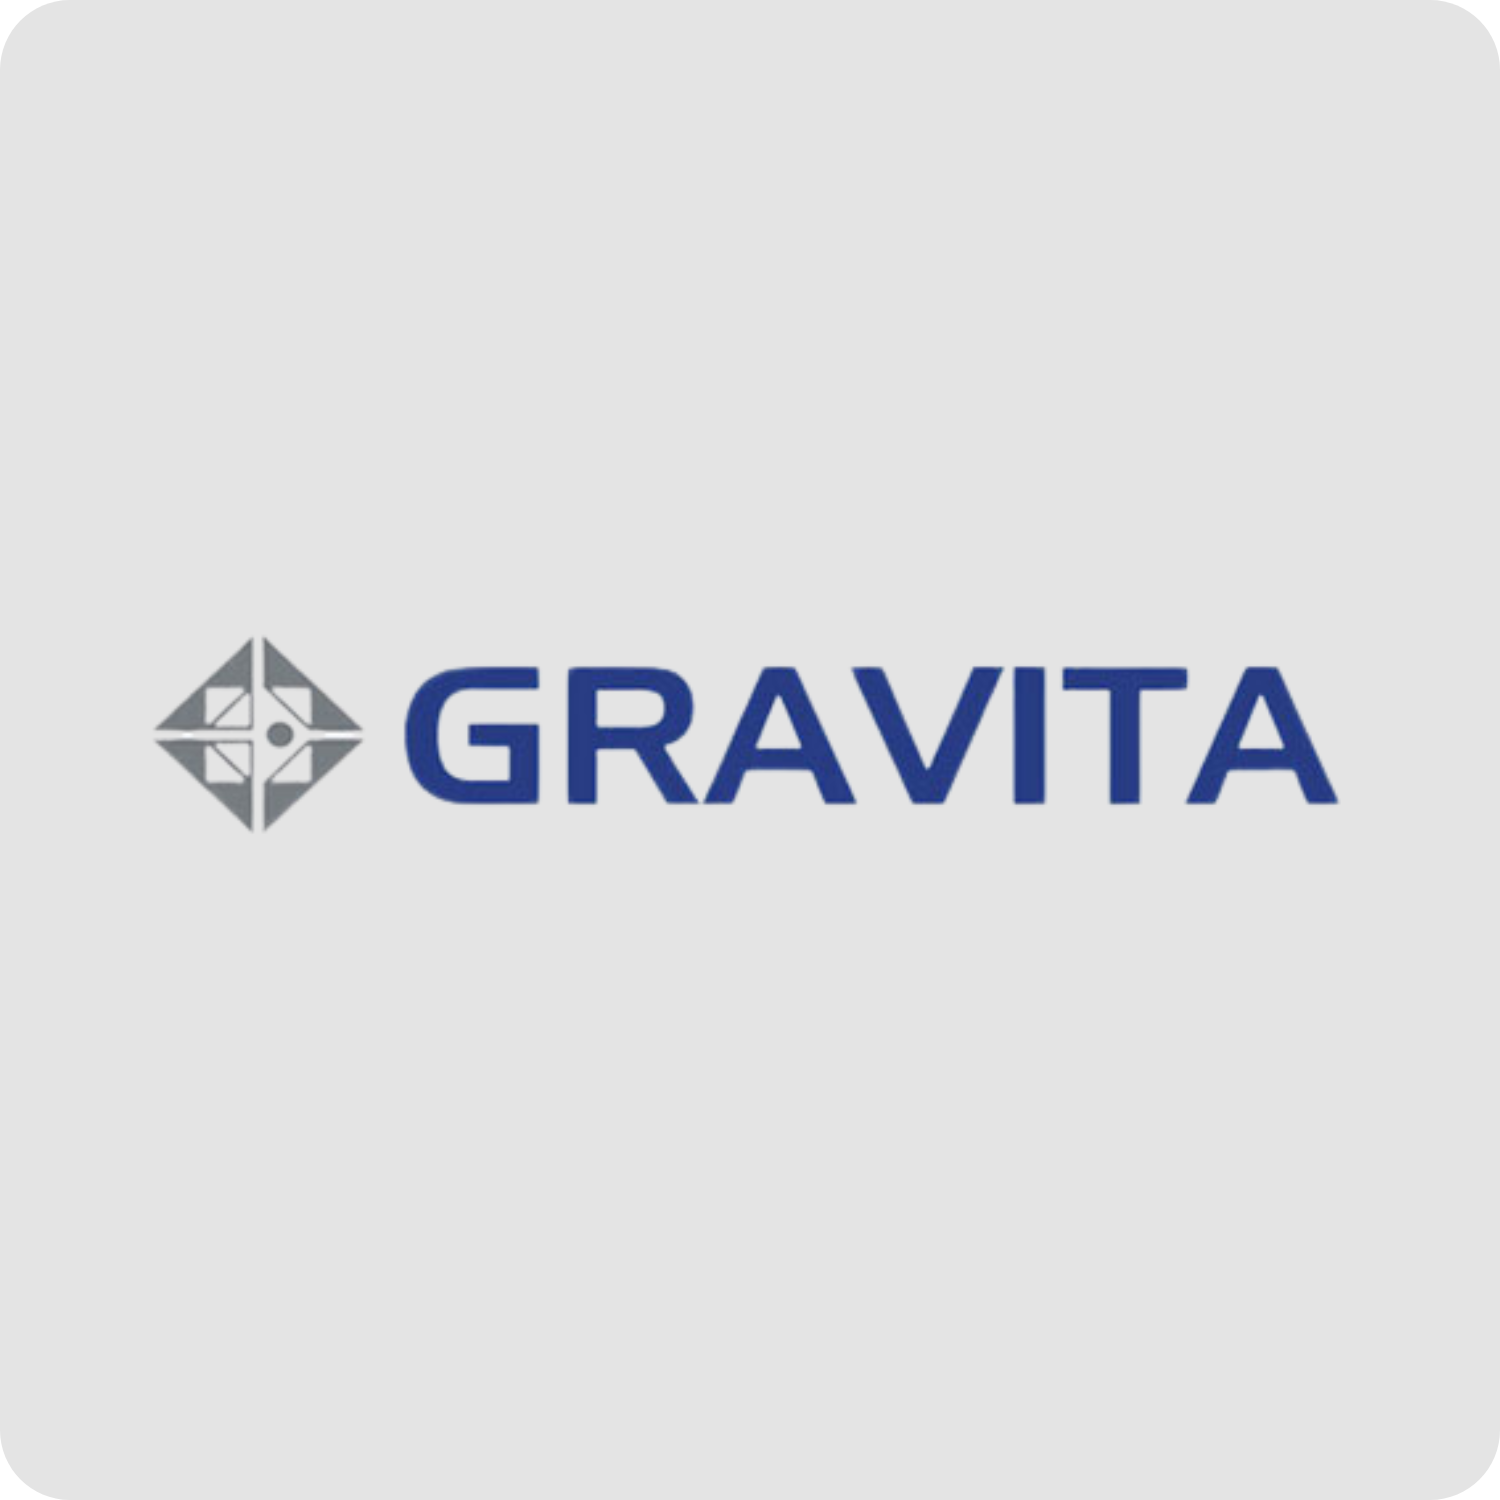 Agoan Client Gravita Logo